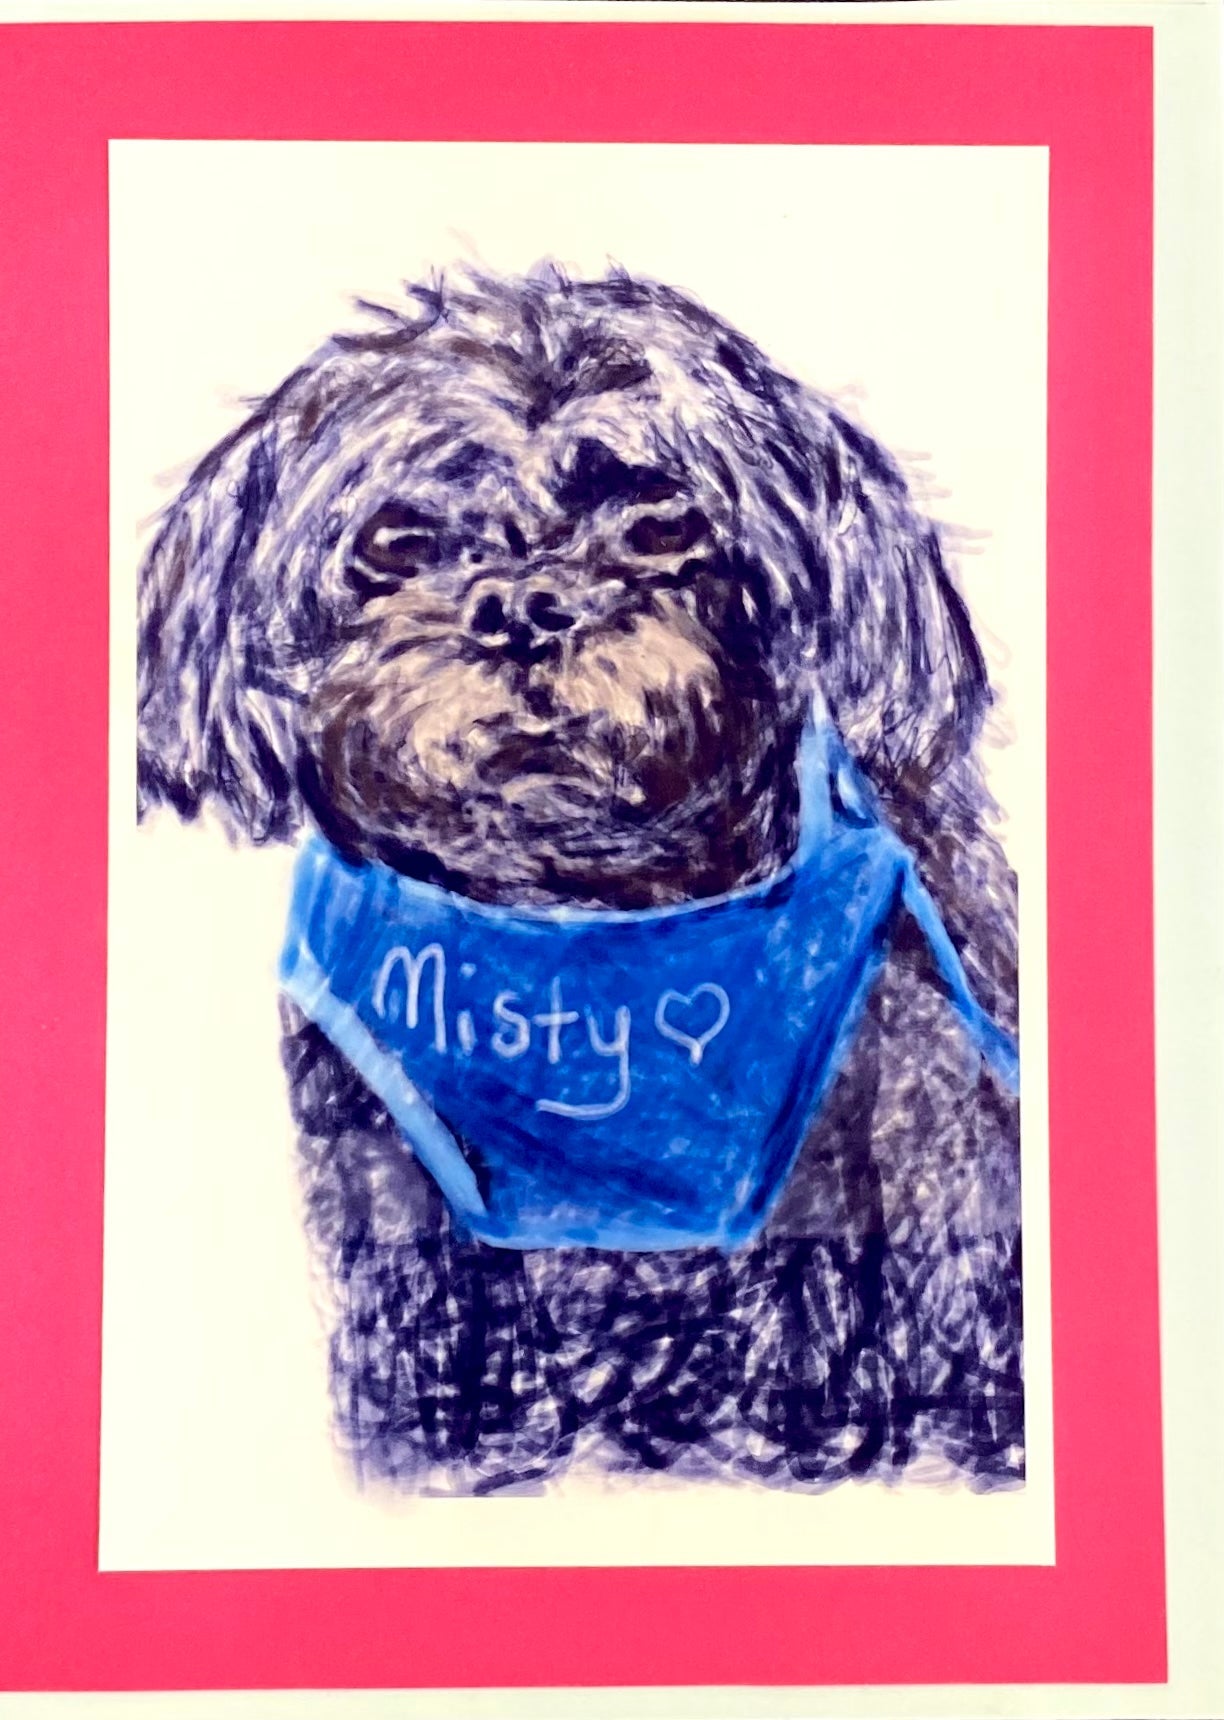 “Misty” Greeting Card - Blue Cava